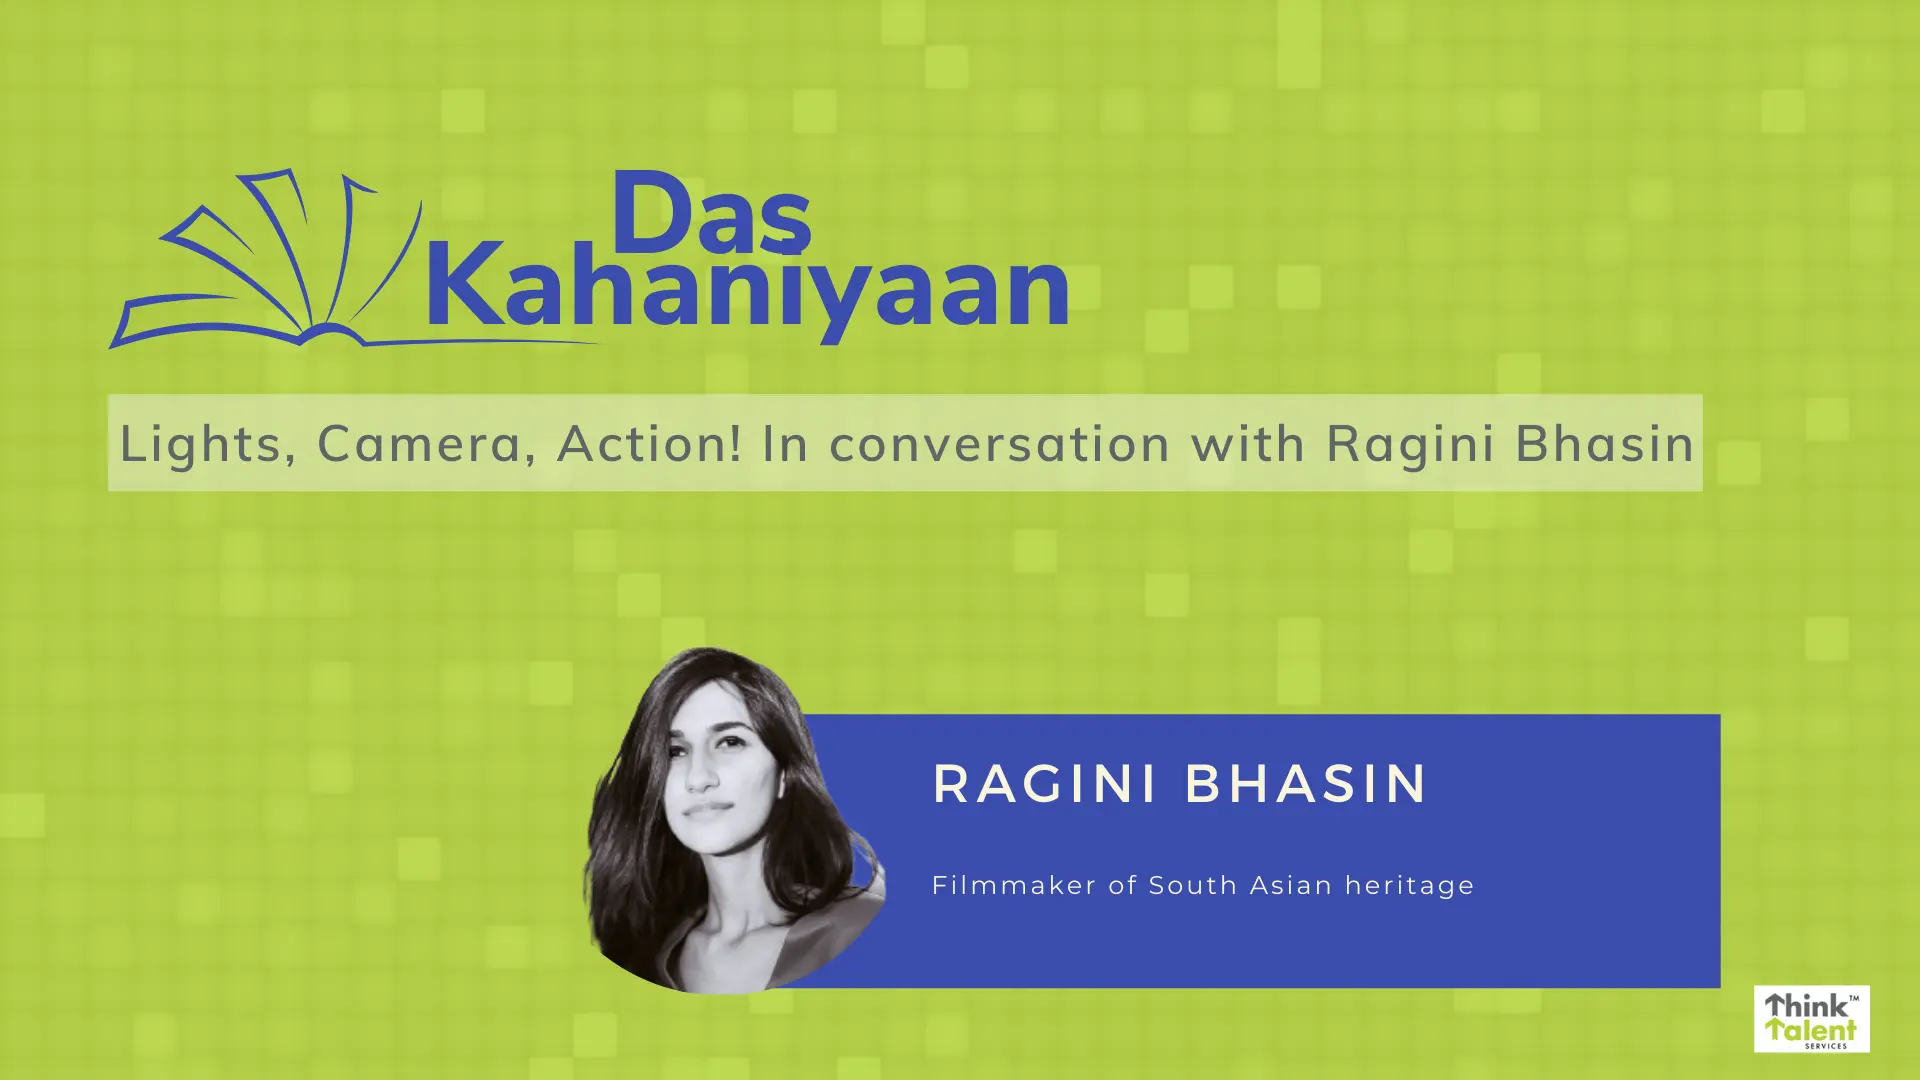 Ragini Bhasin: Award-winning filmmaker, discussing her work and journey